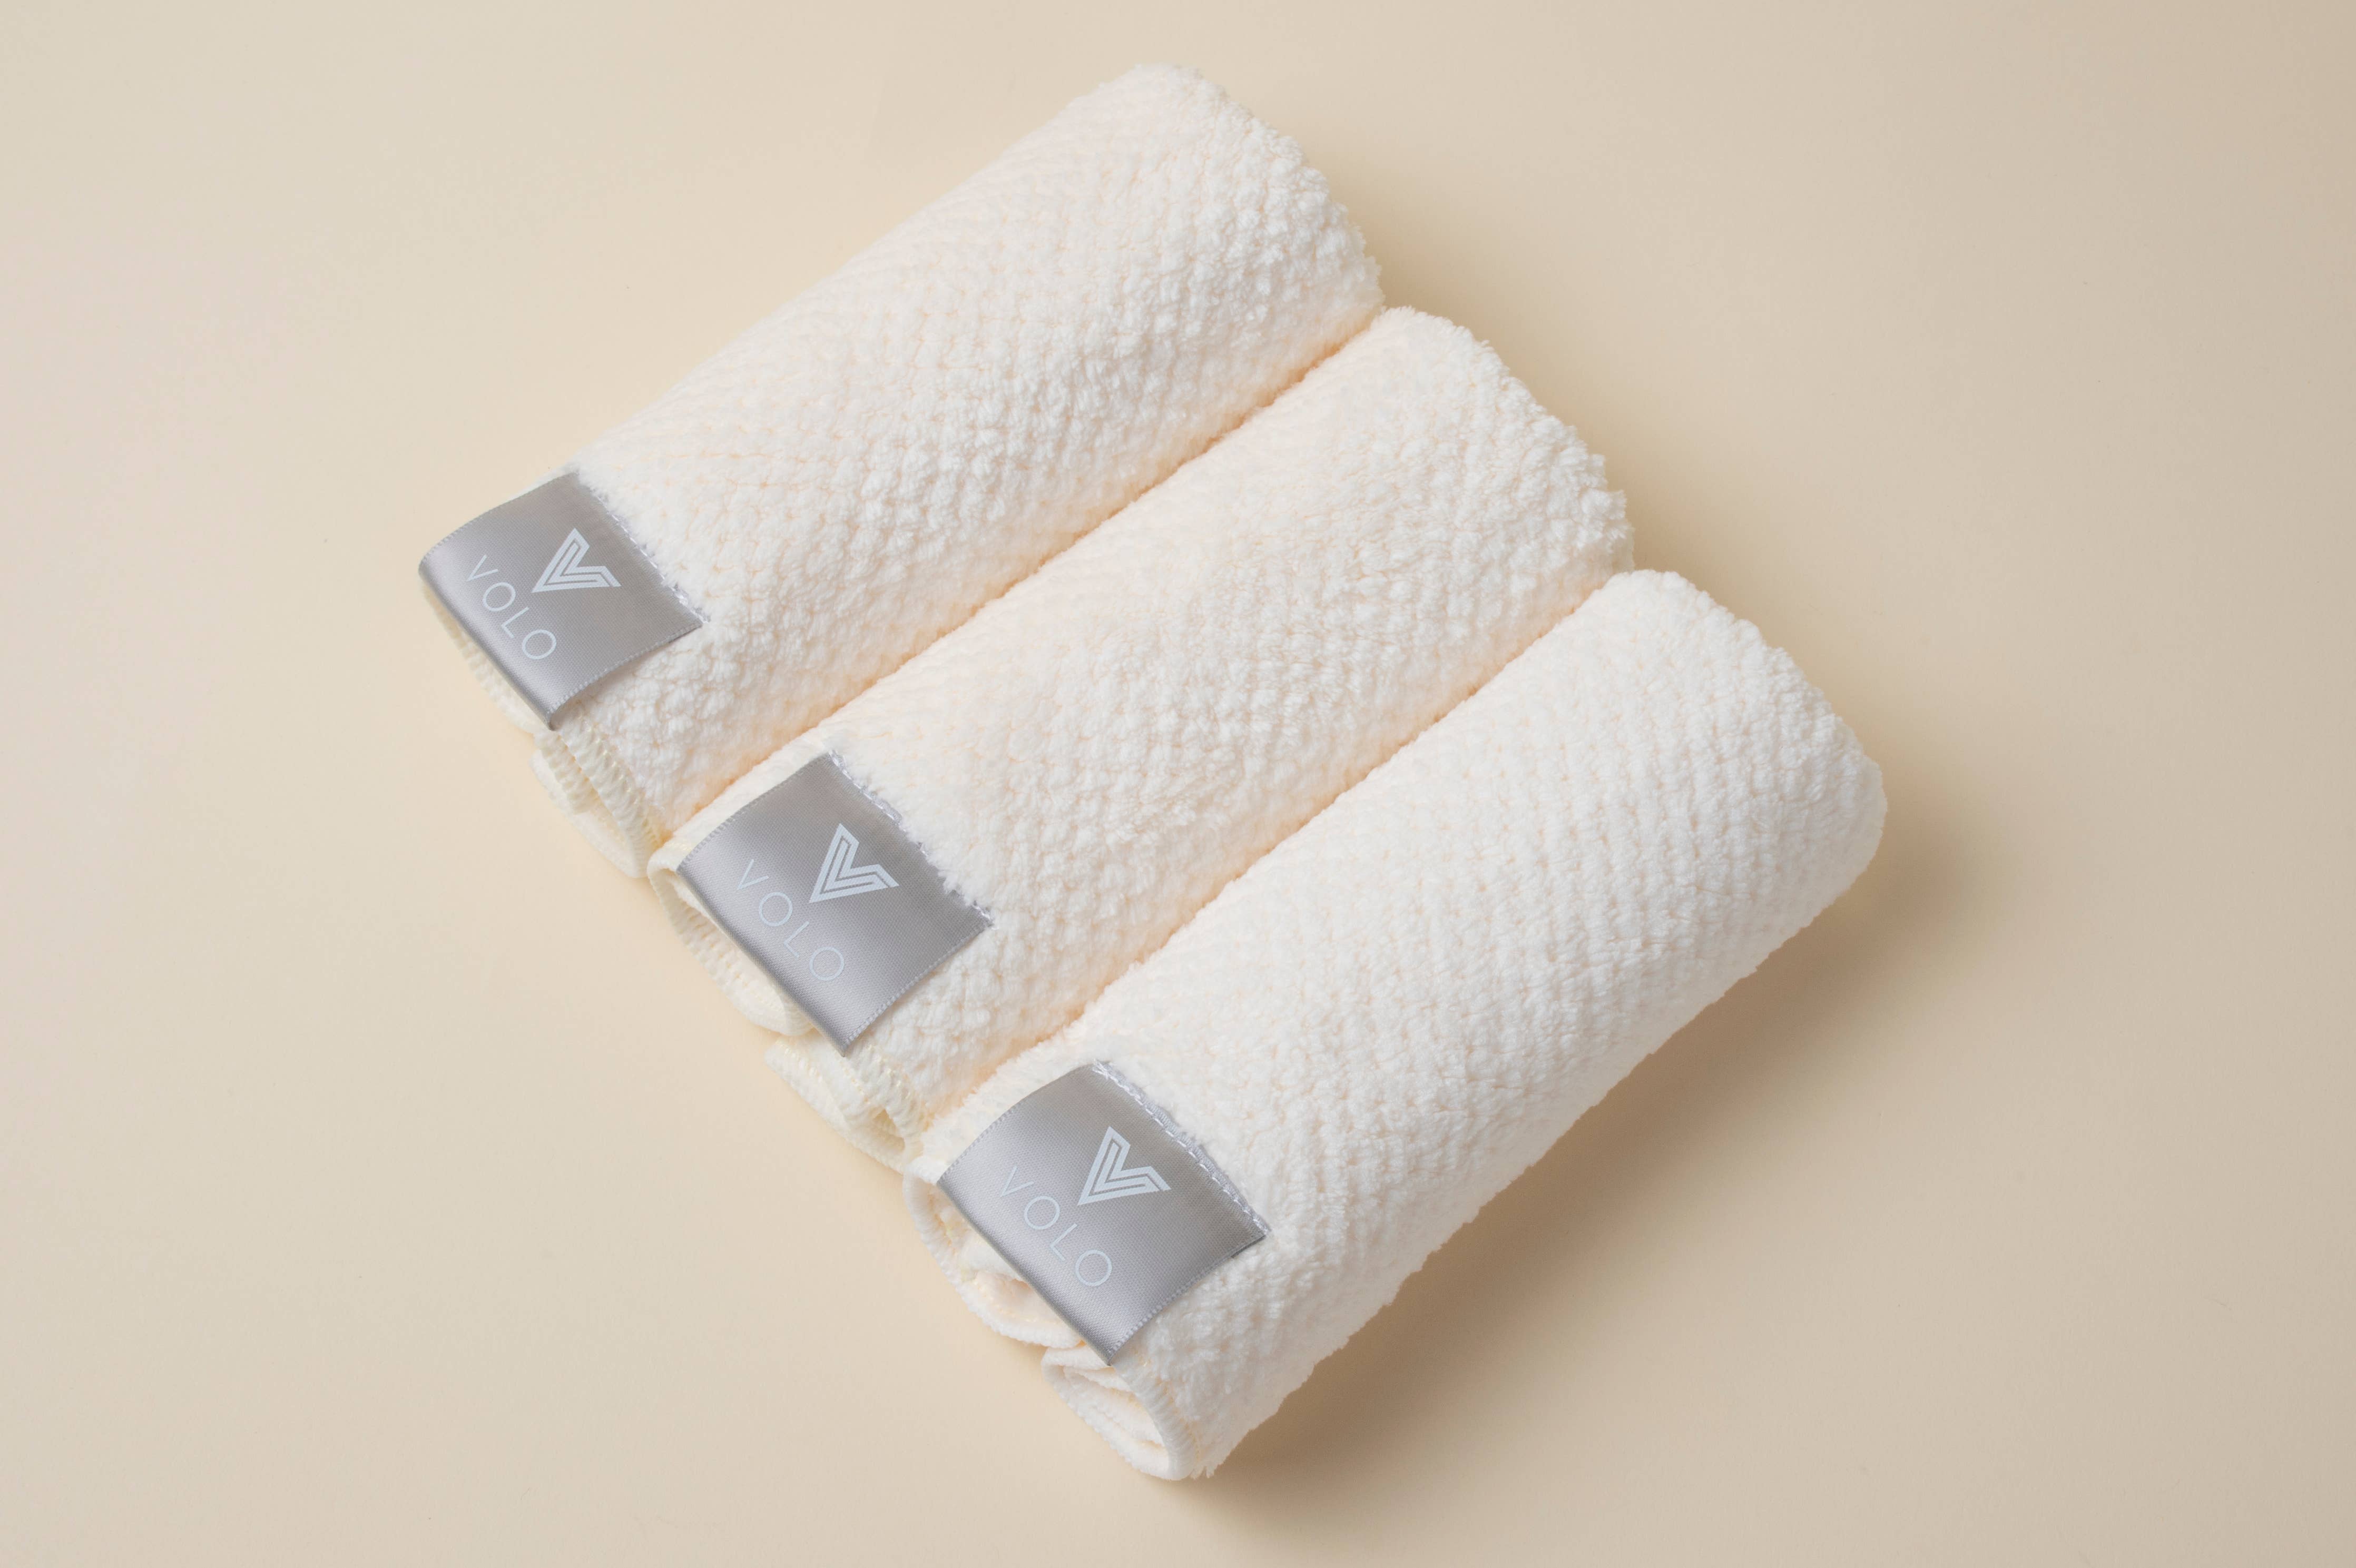 VOLO Beauty - VOLO Face Towel: Salt White